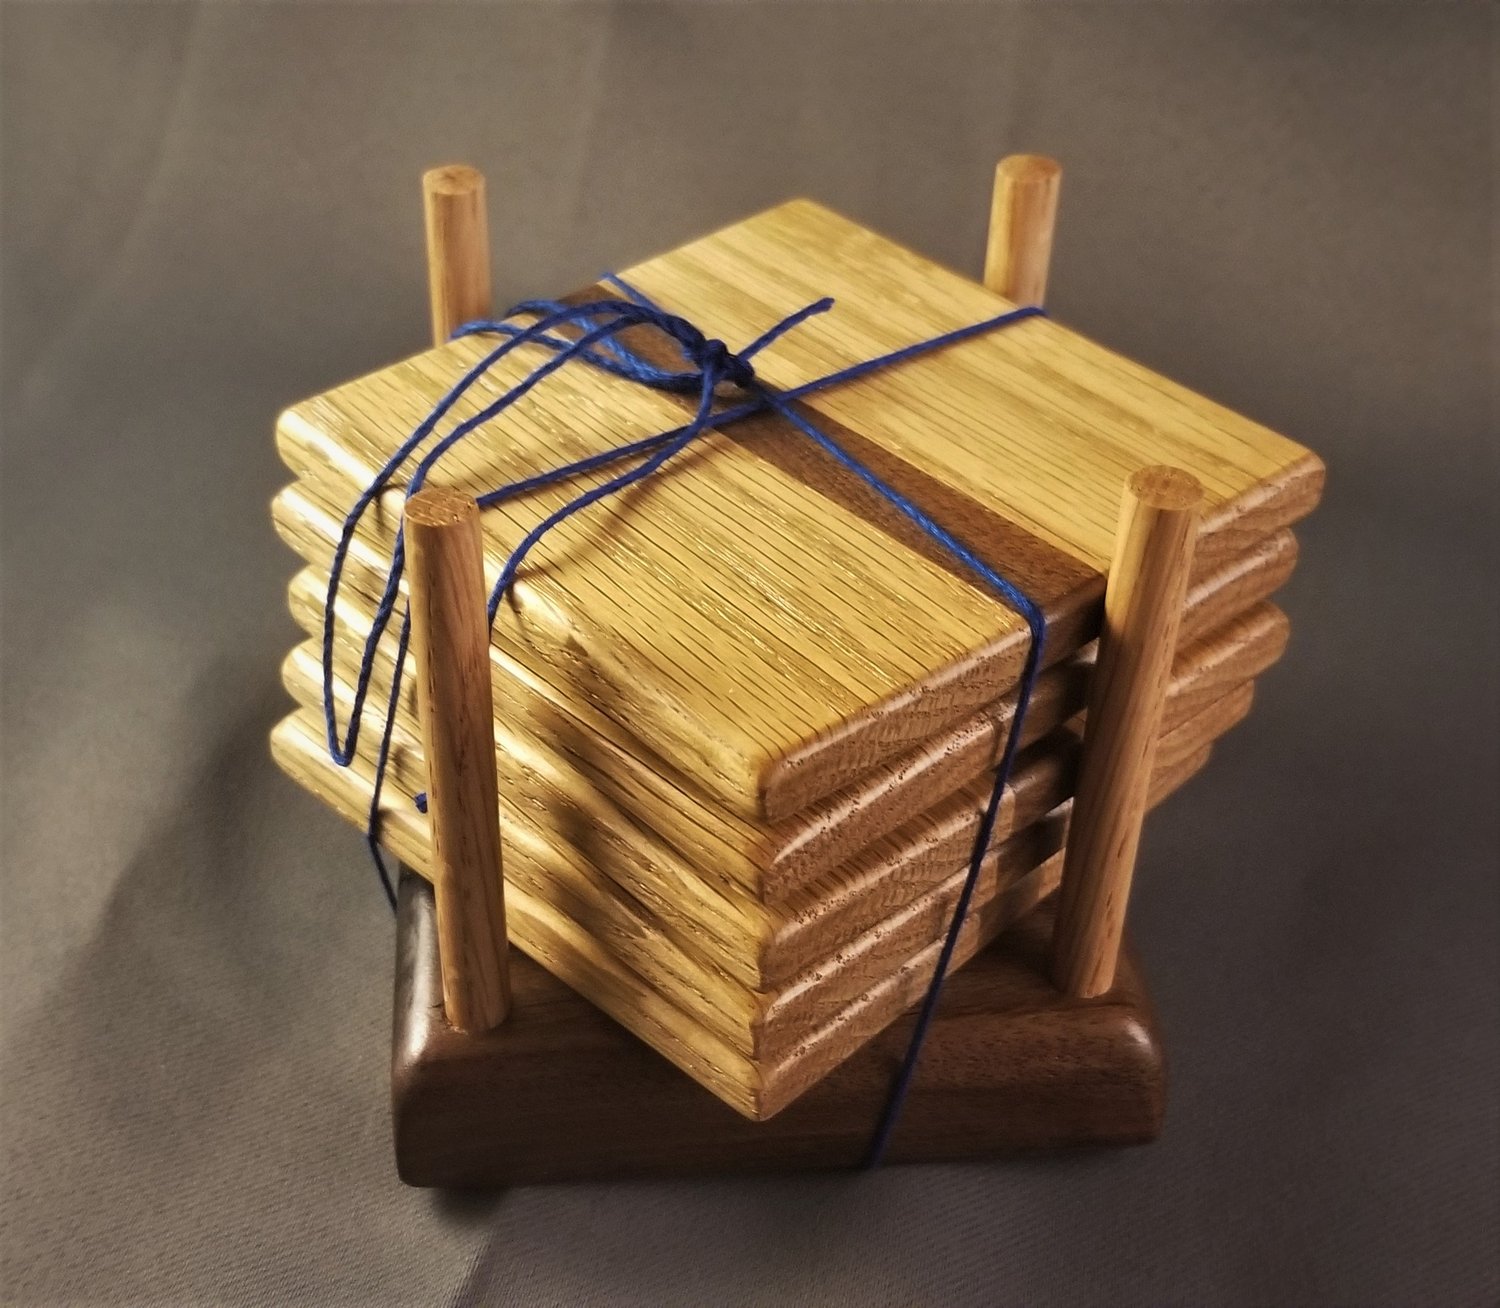 Haukea handmade coaster made of juniper wood